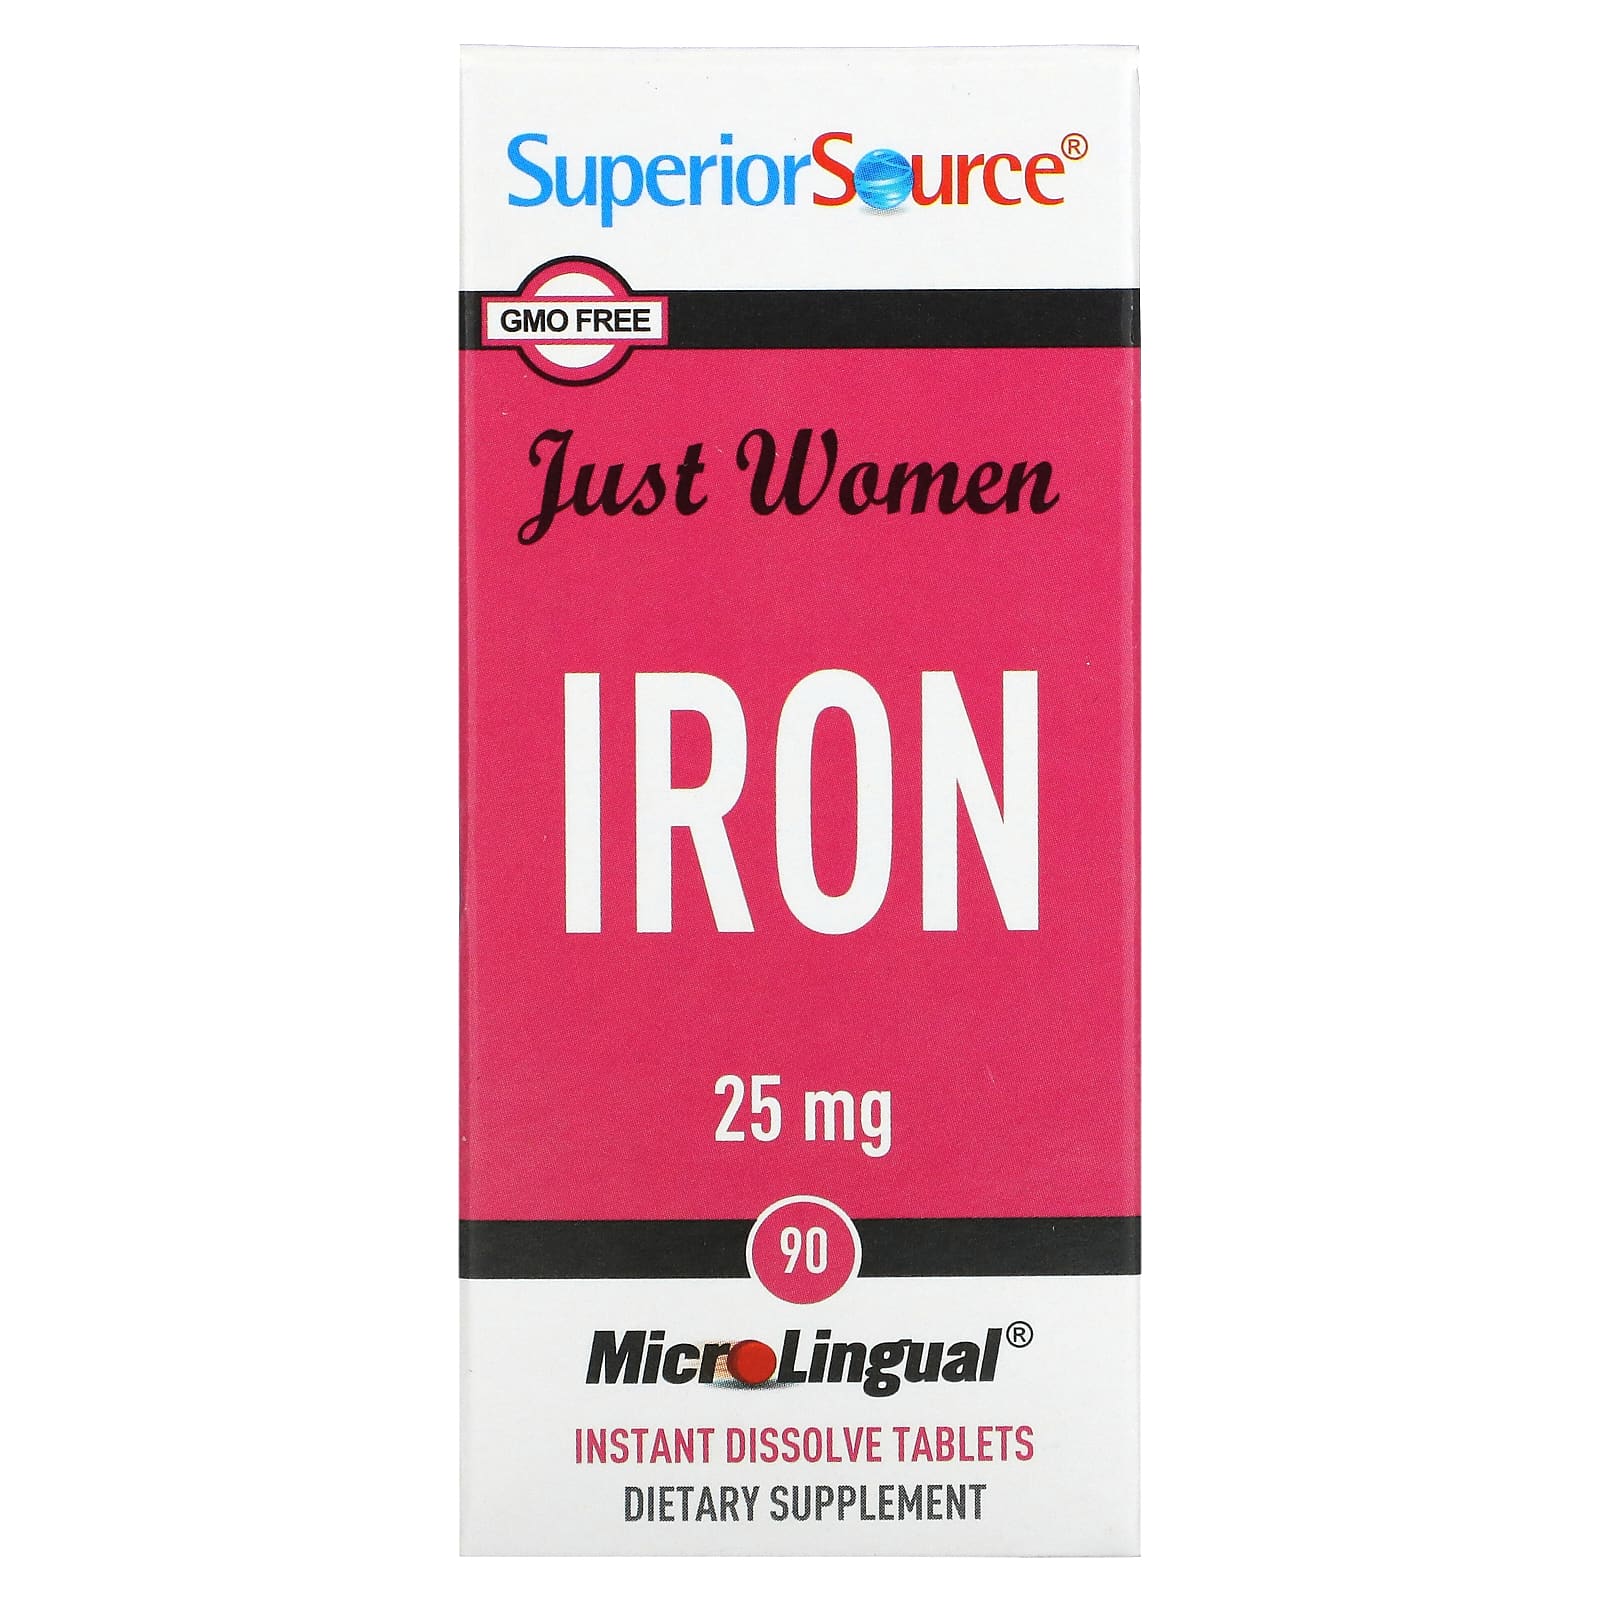 Superior Source Just Women железо 25 мг 90 микролингвальных быстрорастворимых таблеток superior source sleep